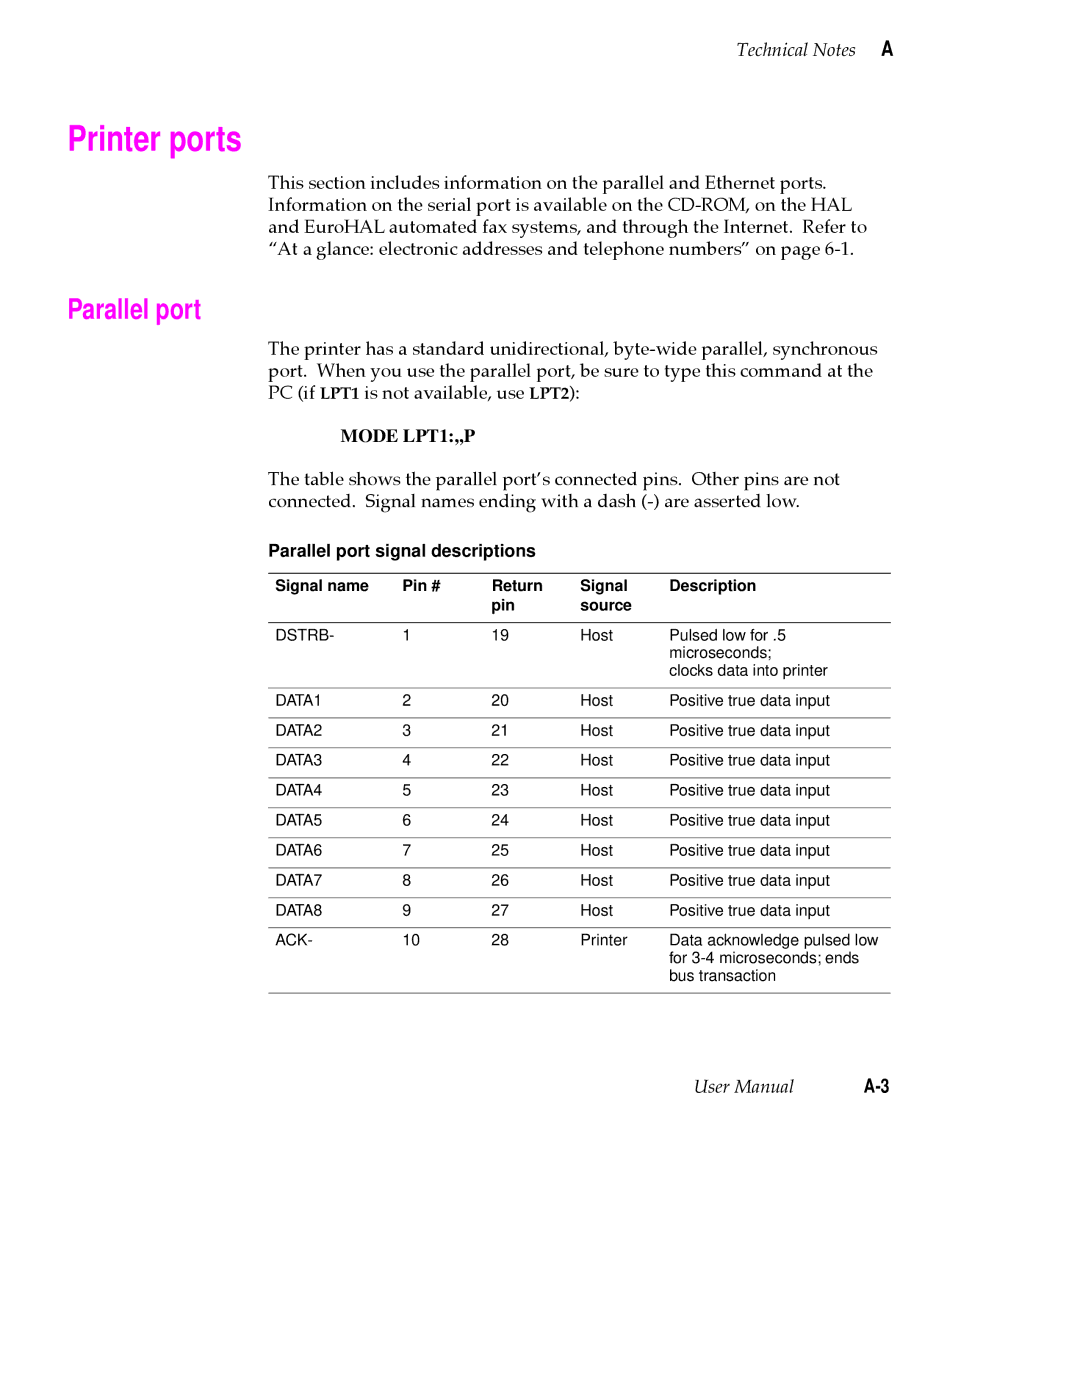 Tektronix 480X Printer ports, Parallel port signal descriptions, Signal name Pin # Return Description Source 